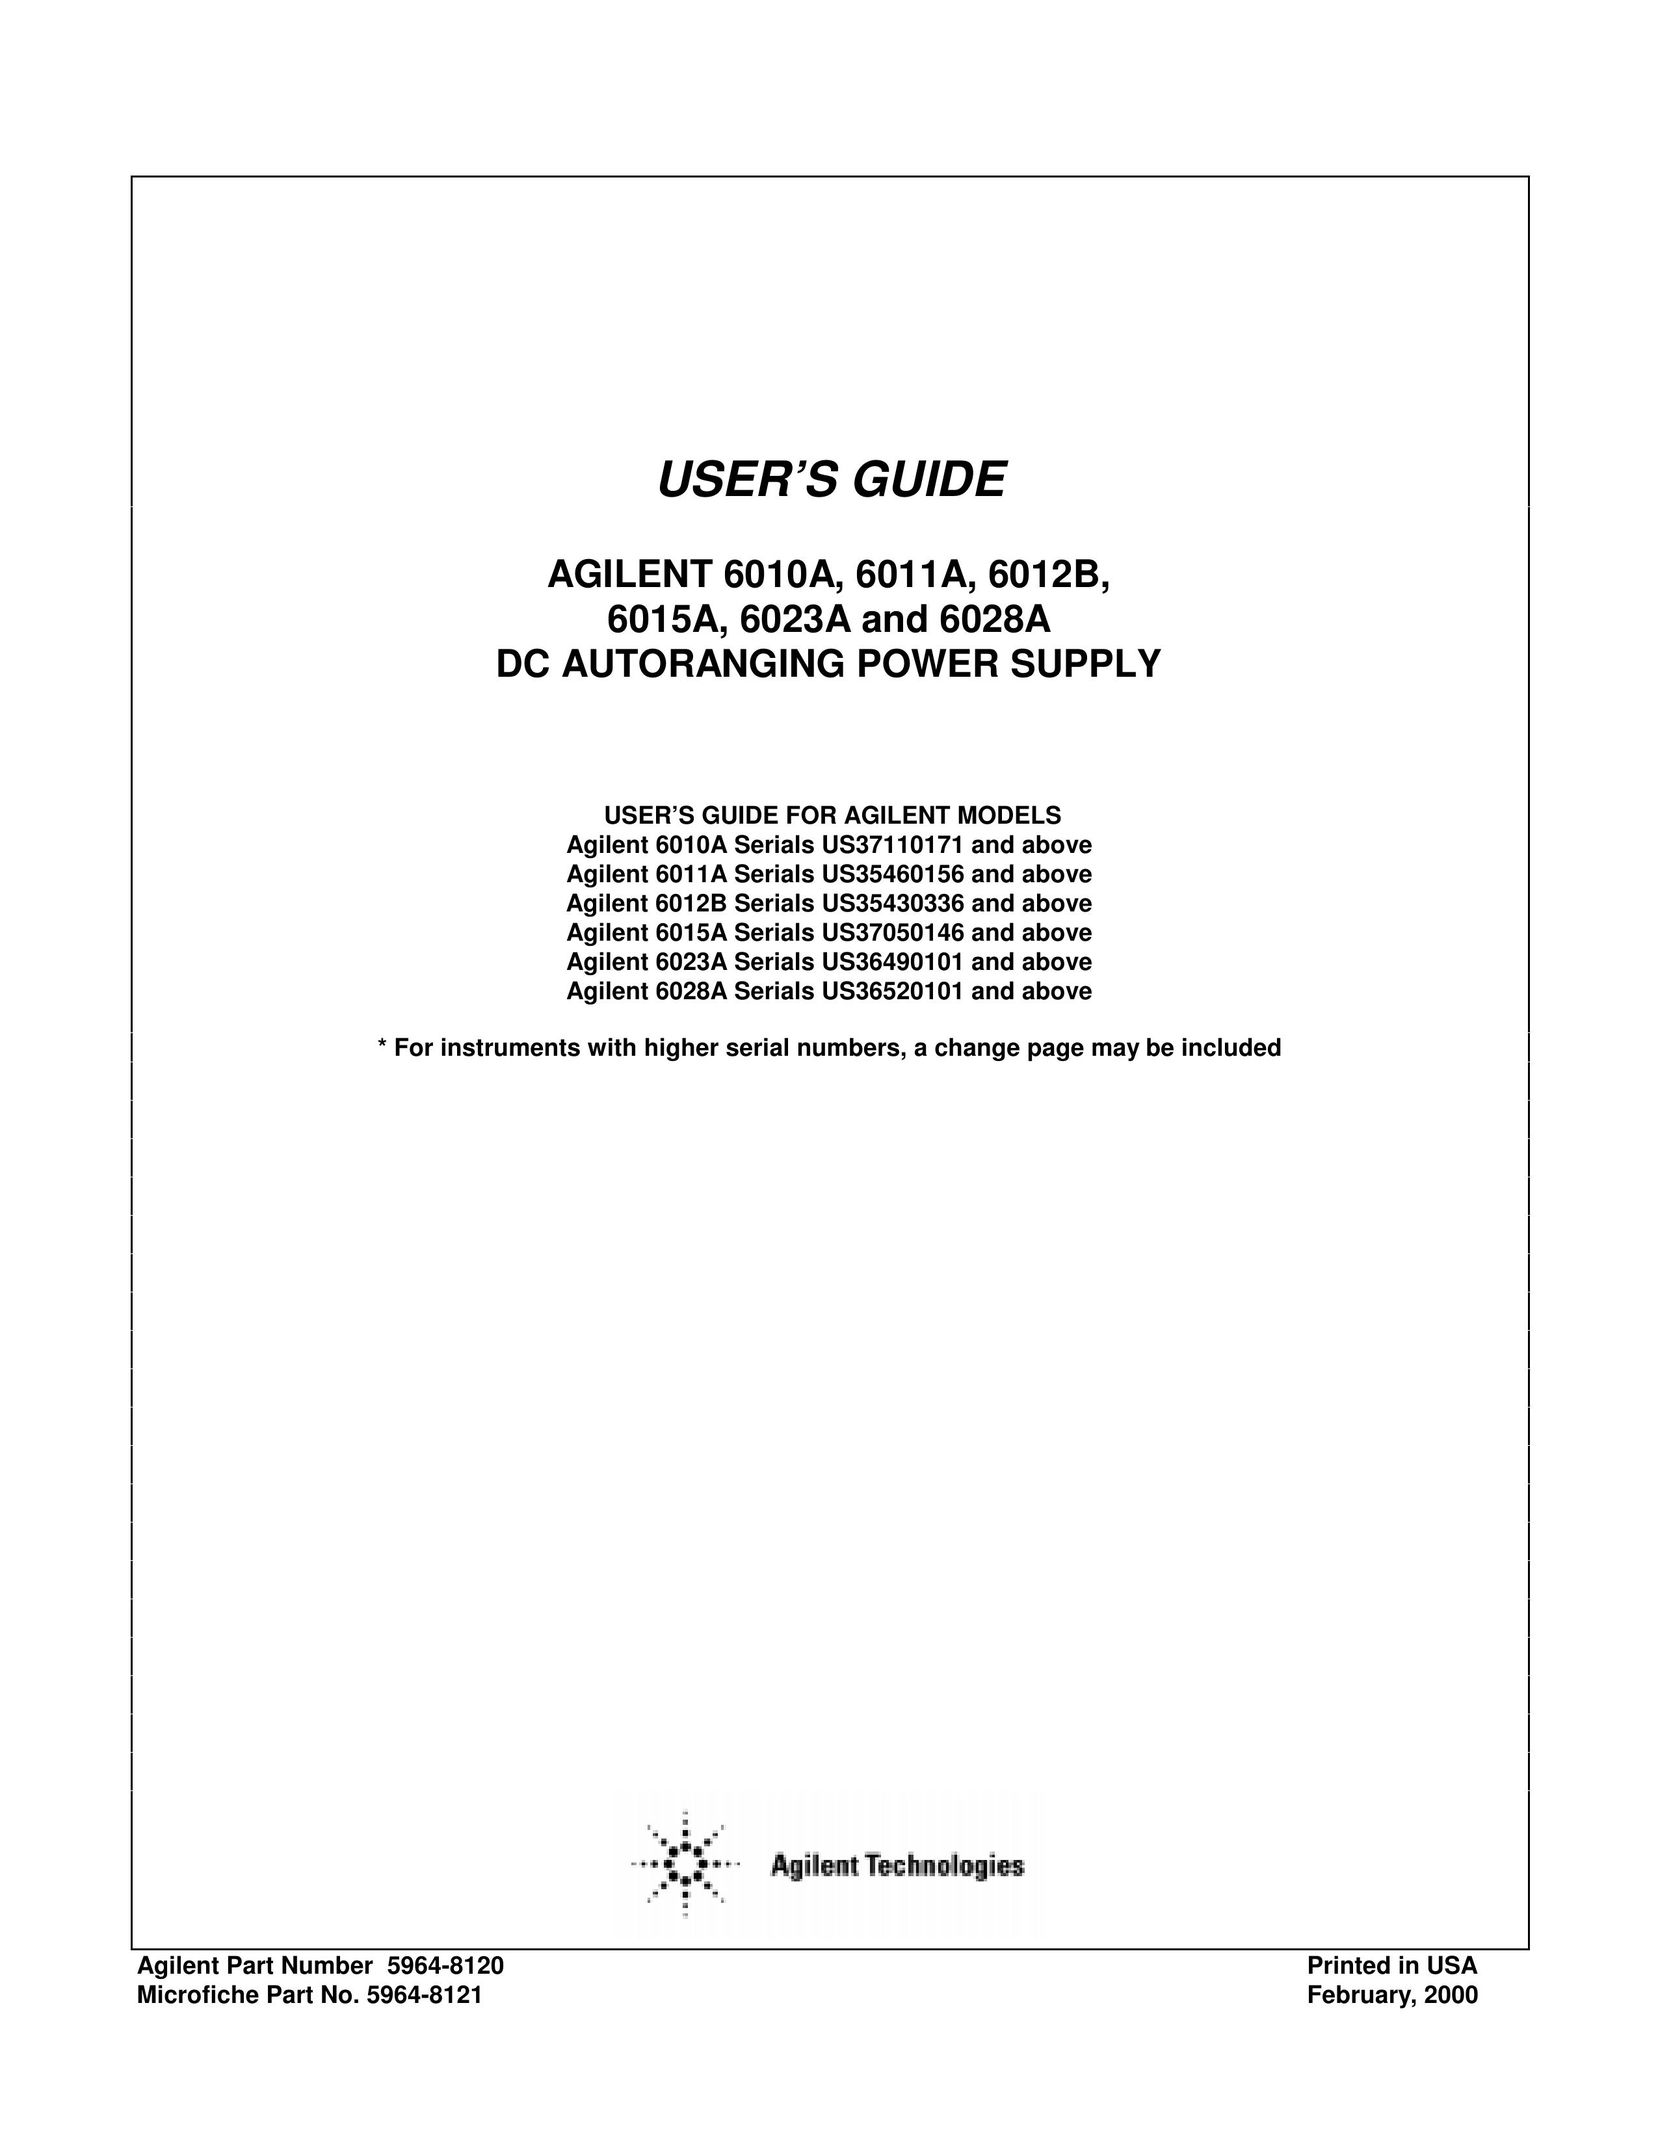 Agilent Technologies 6012b Welding System User Manual